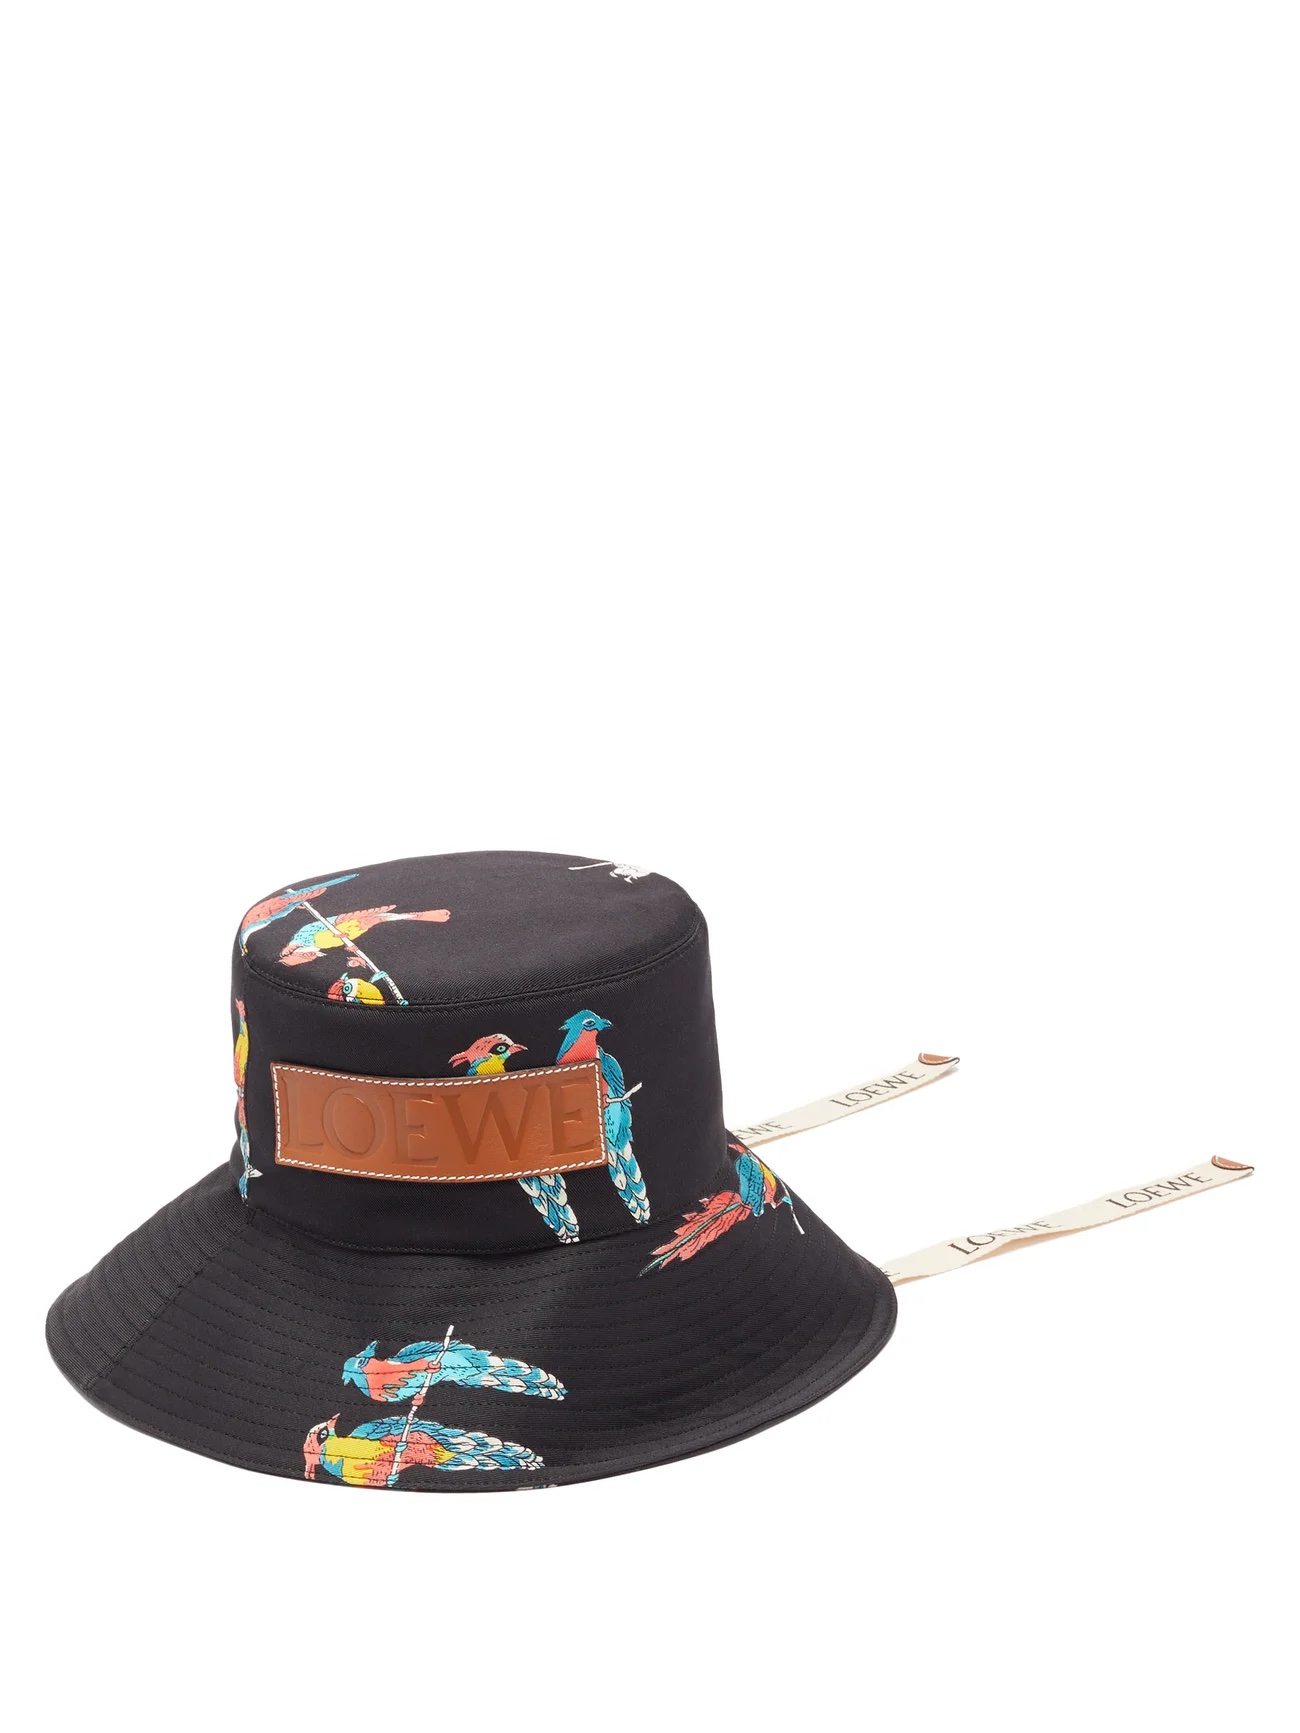 stylish bucket hats